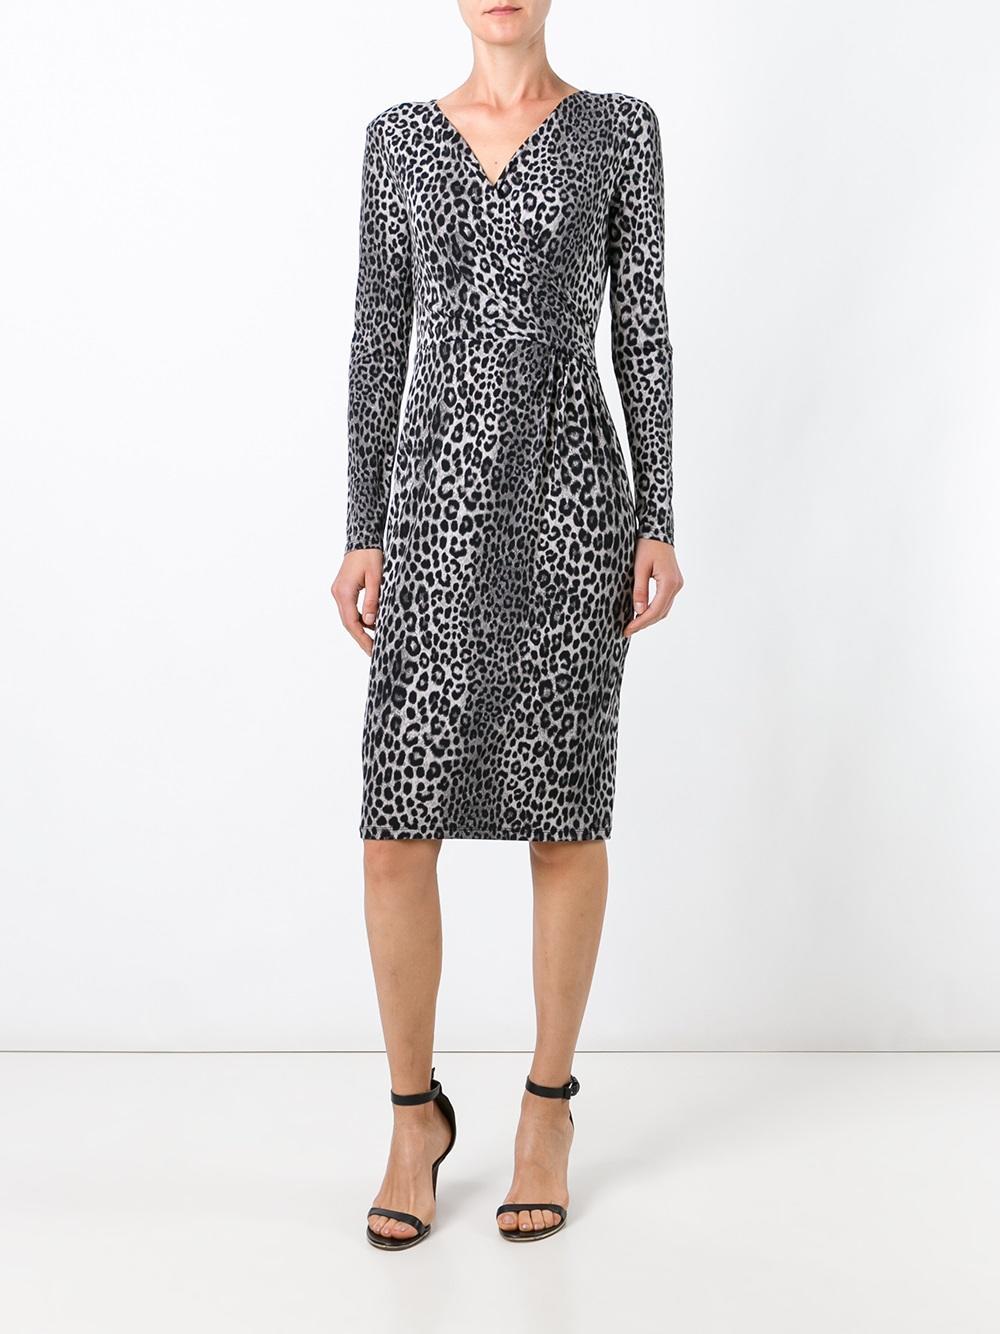 MICHAEL Michael Kors Leopard Print Dress in Gray - Lyst